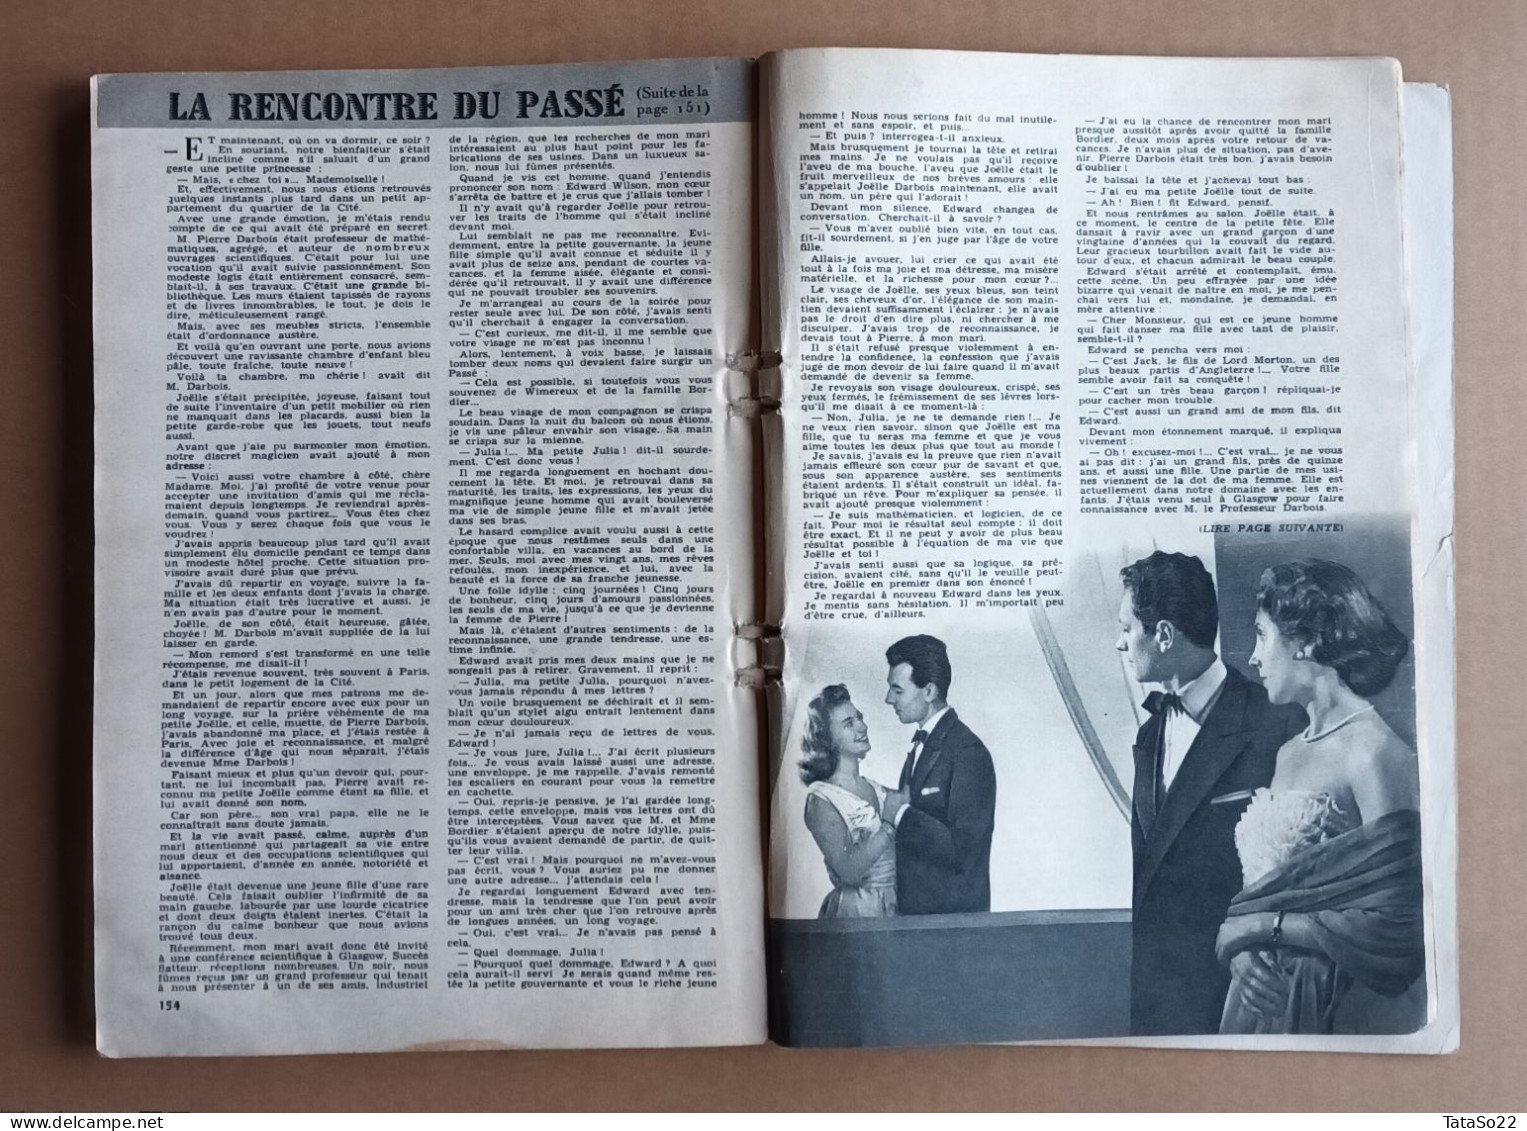 Intimité du foyer - almanach 1956